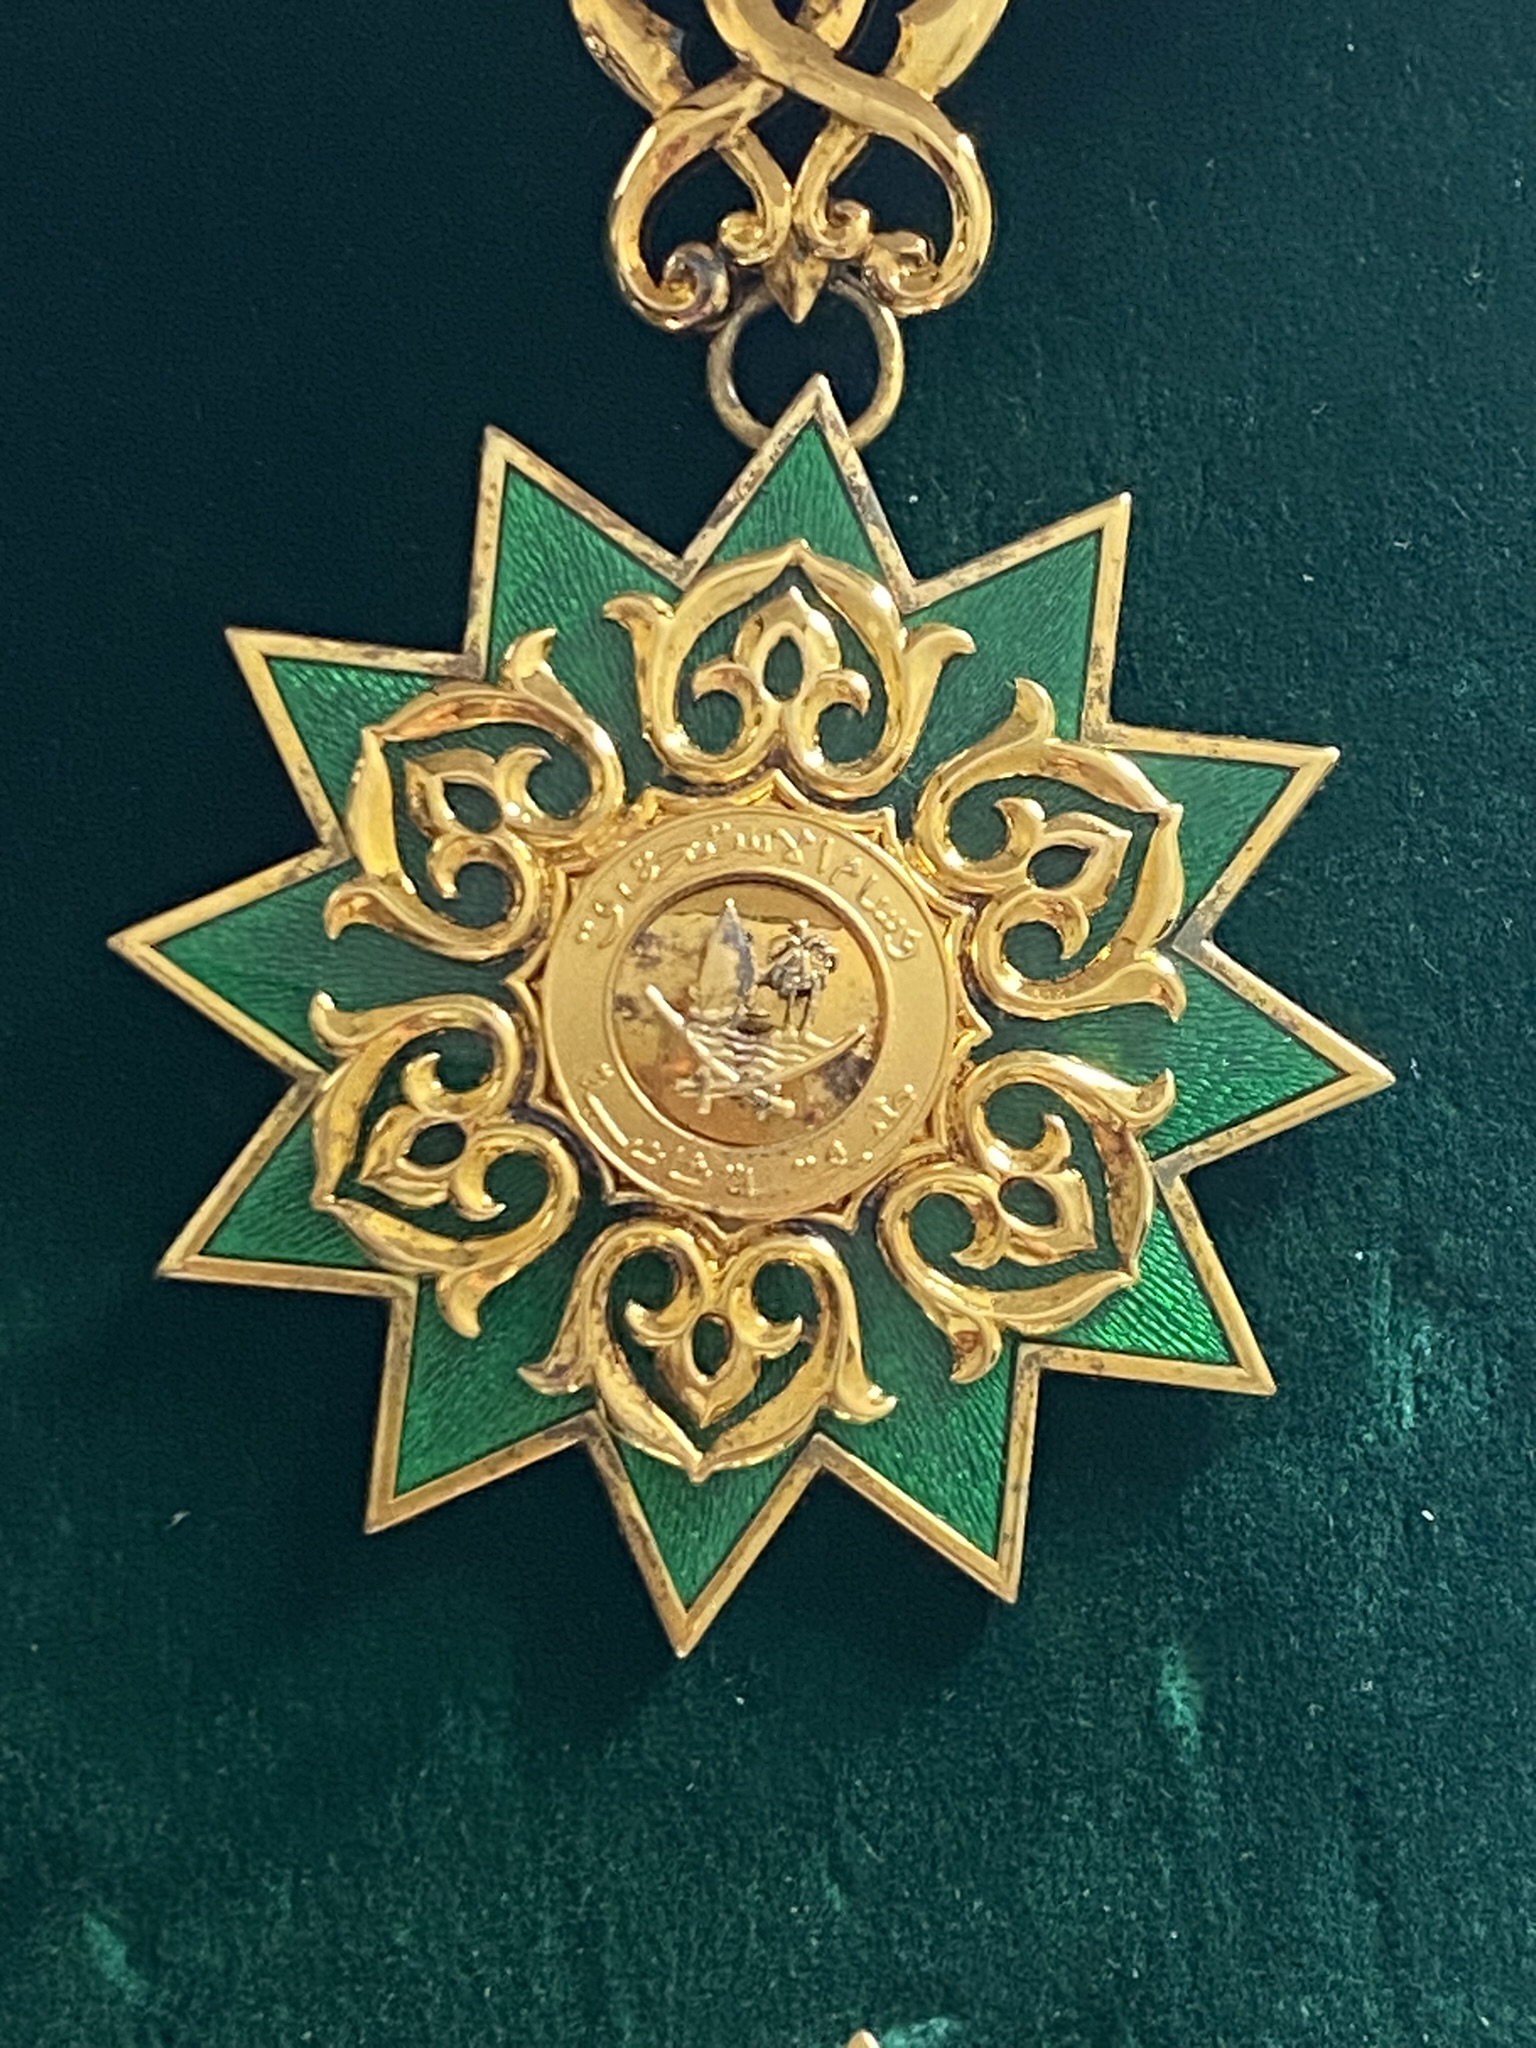 1978 Qatar Order of Merit 2nd Class Neck Badge Breast Star Medal Emir Khalifa